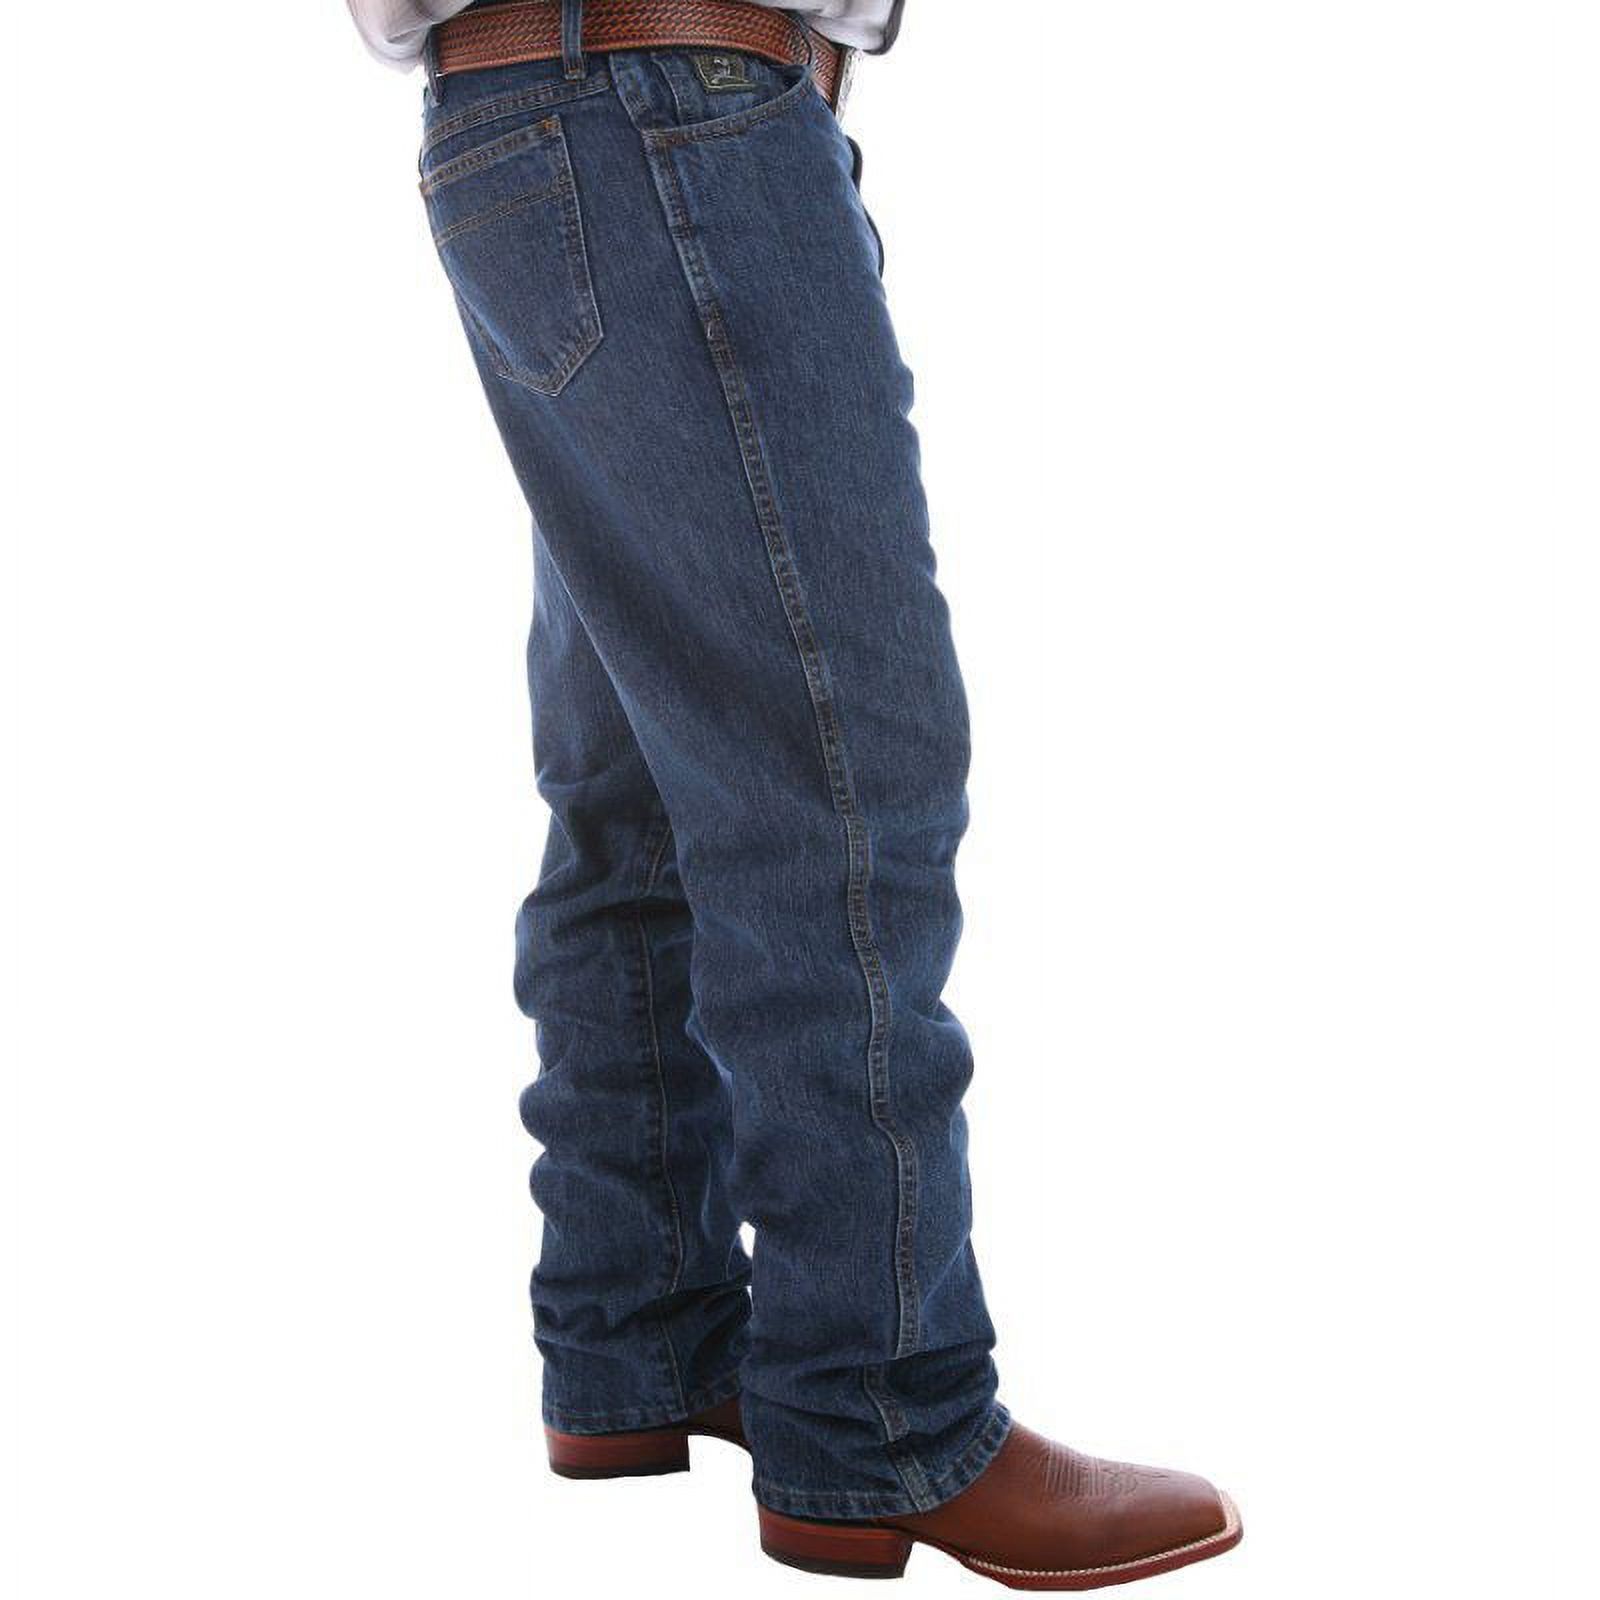 Cinch Apparel Mens Green Label Original Fit Jeans 29W x 38L Dark Stonewash - image 2 of 4